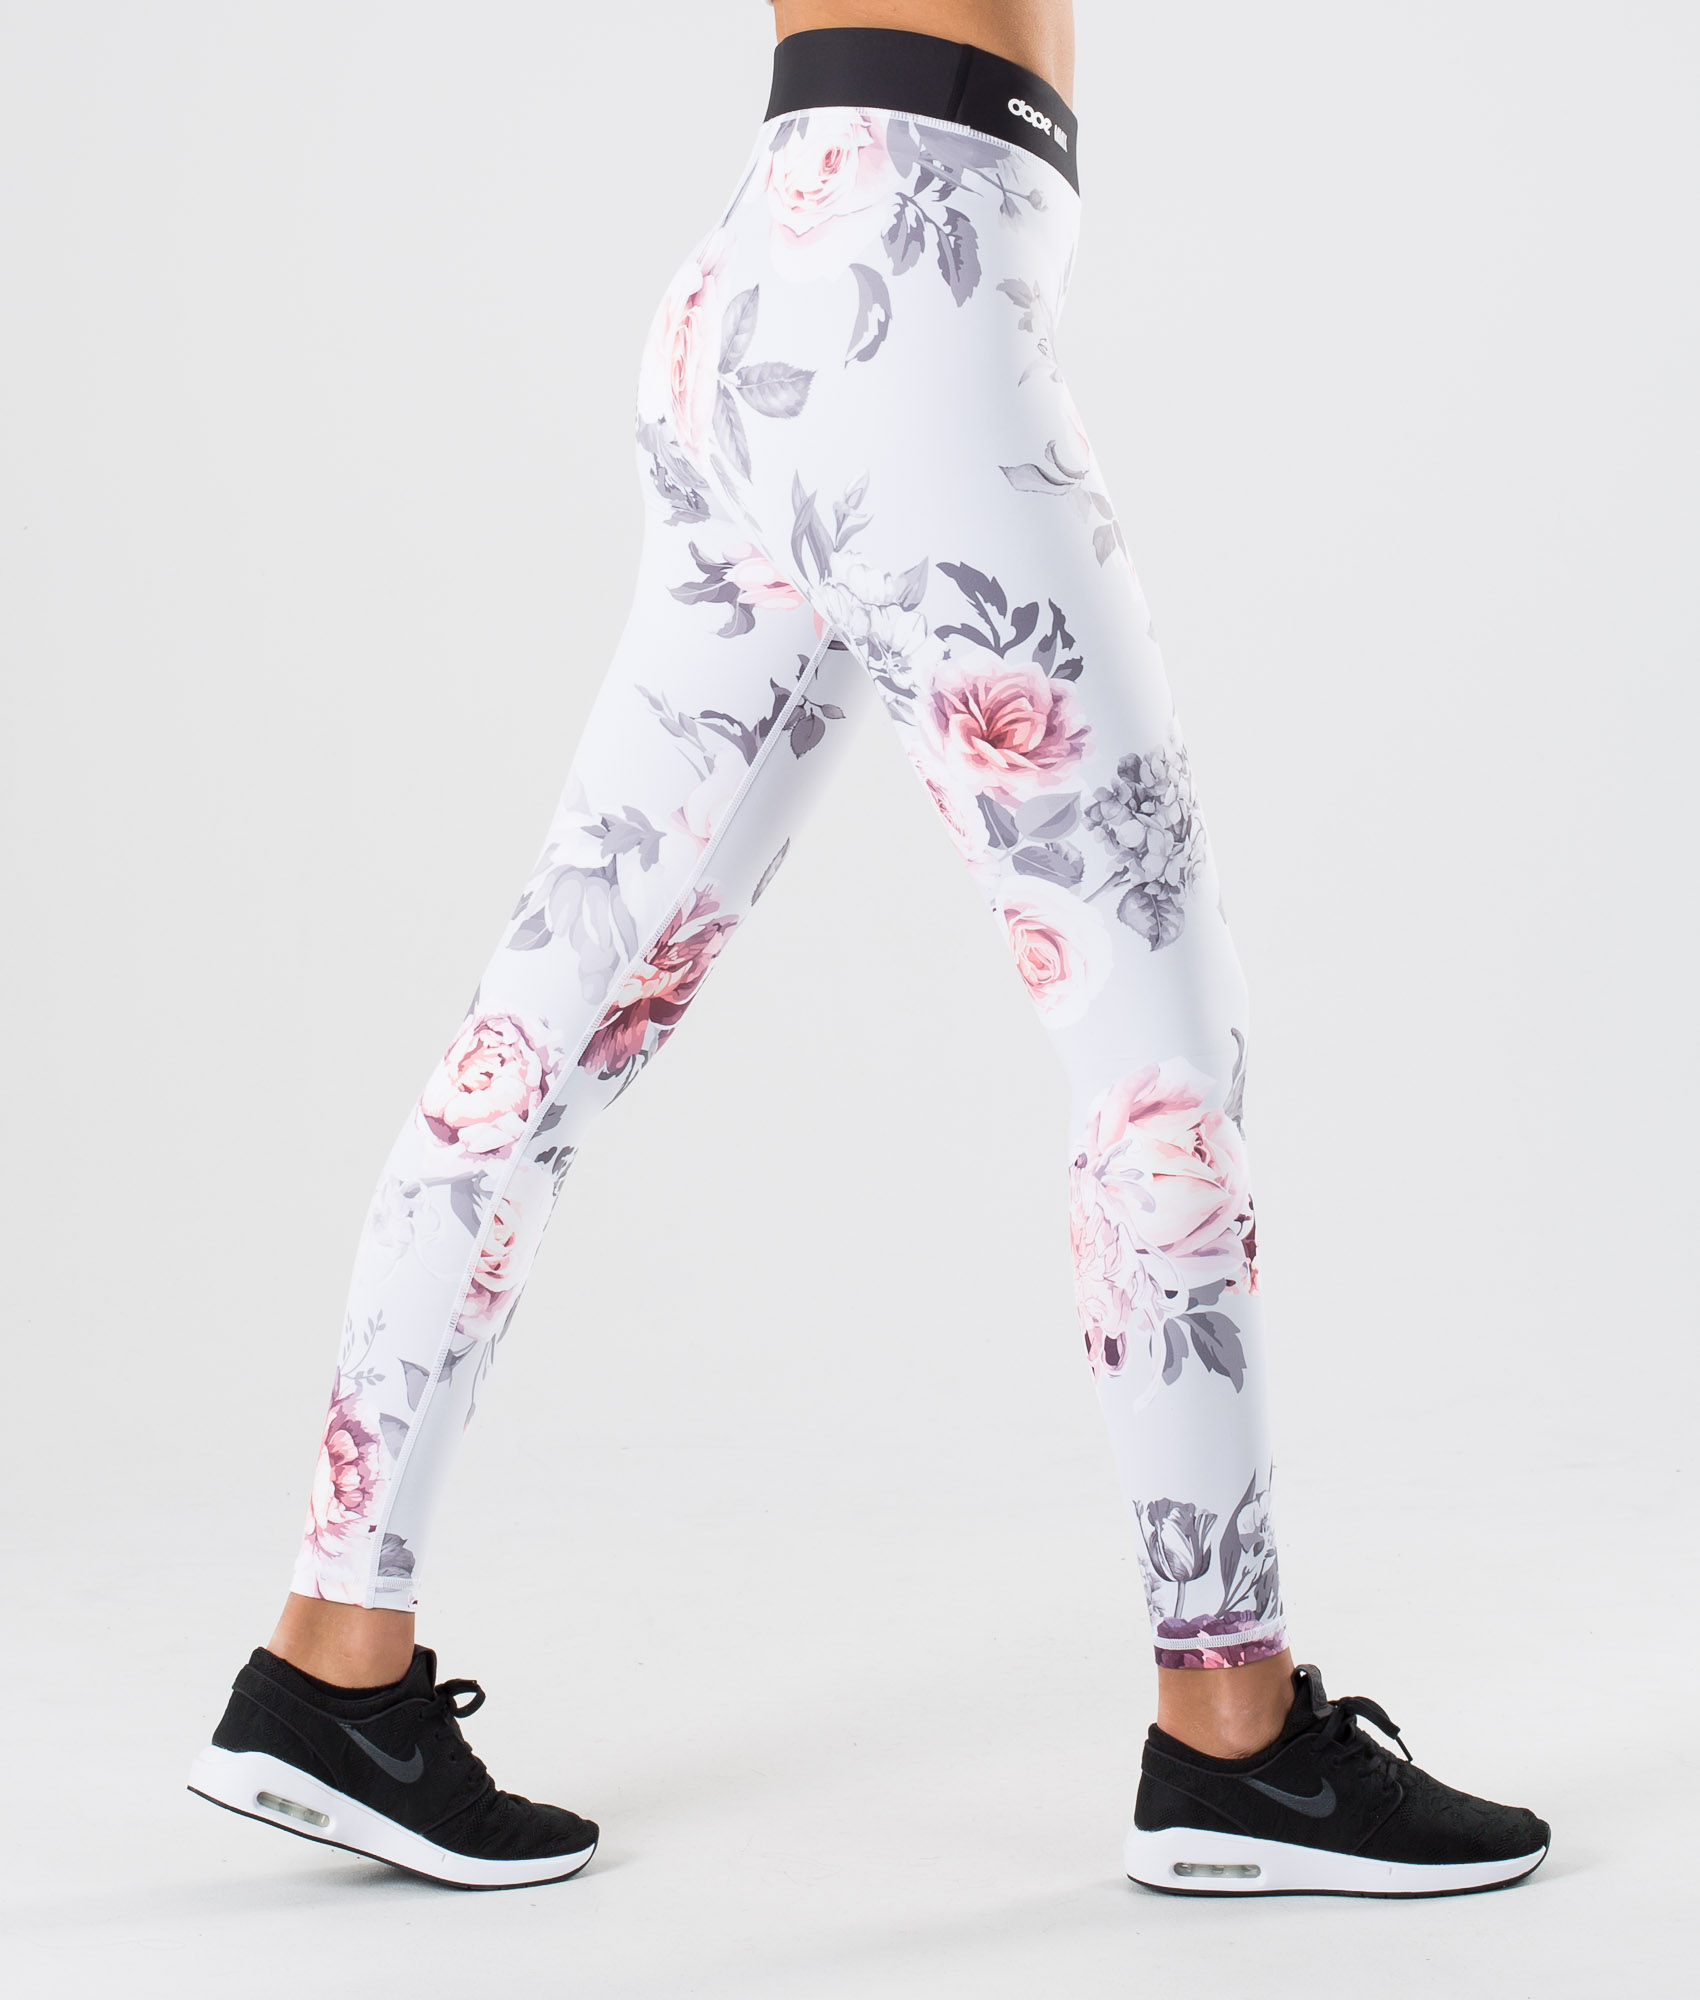 Nike Dri-Fit Floral Print Leggings - Size Small | Floral print leggings,  Clothes design, Fashion